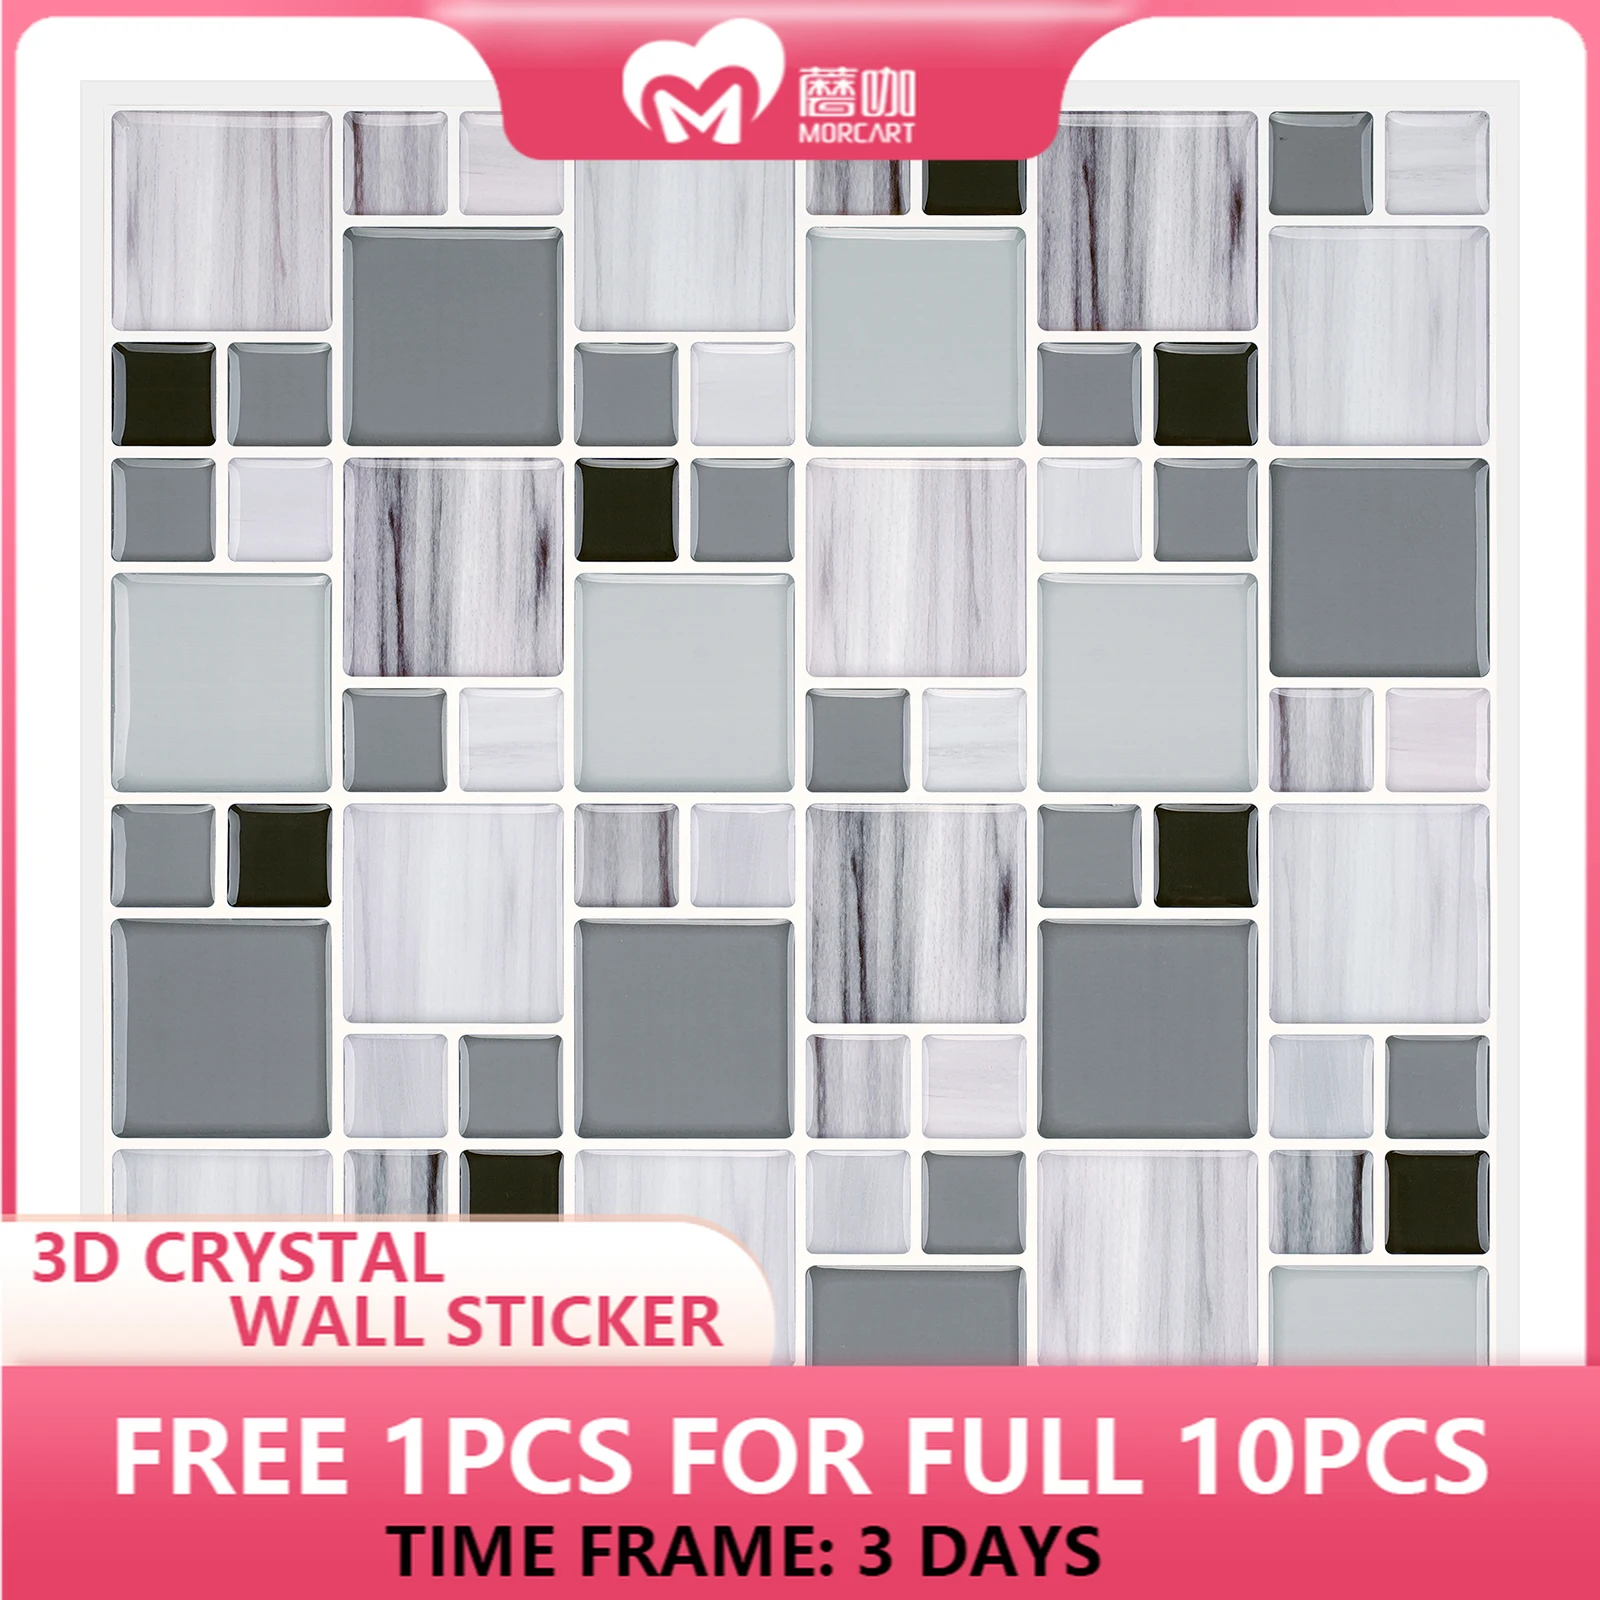 

MORCART Peel and Stick Tiles home decor Self Adhesive Tile Stickers White Wallpaper for Kitchen Bathroom Room Backsplash 1PCS